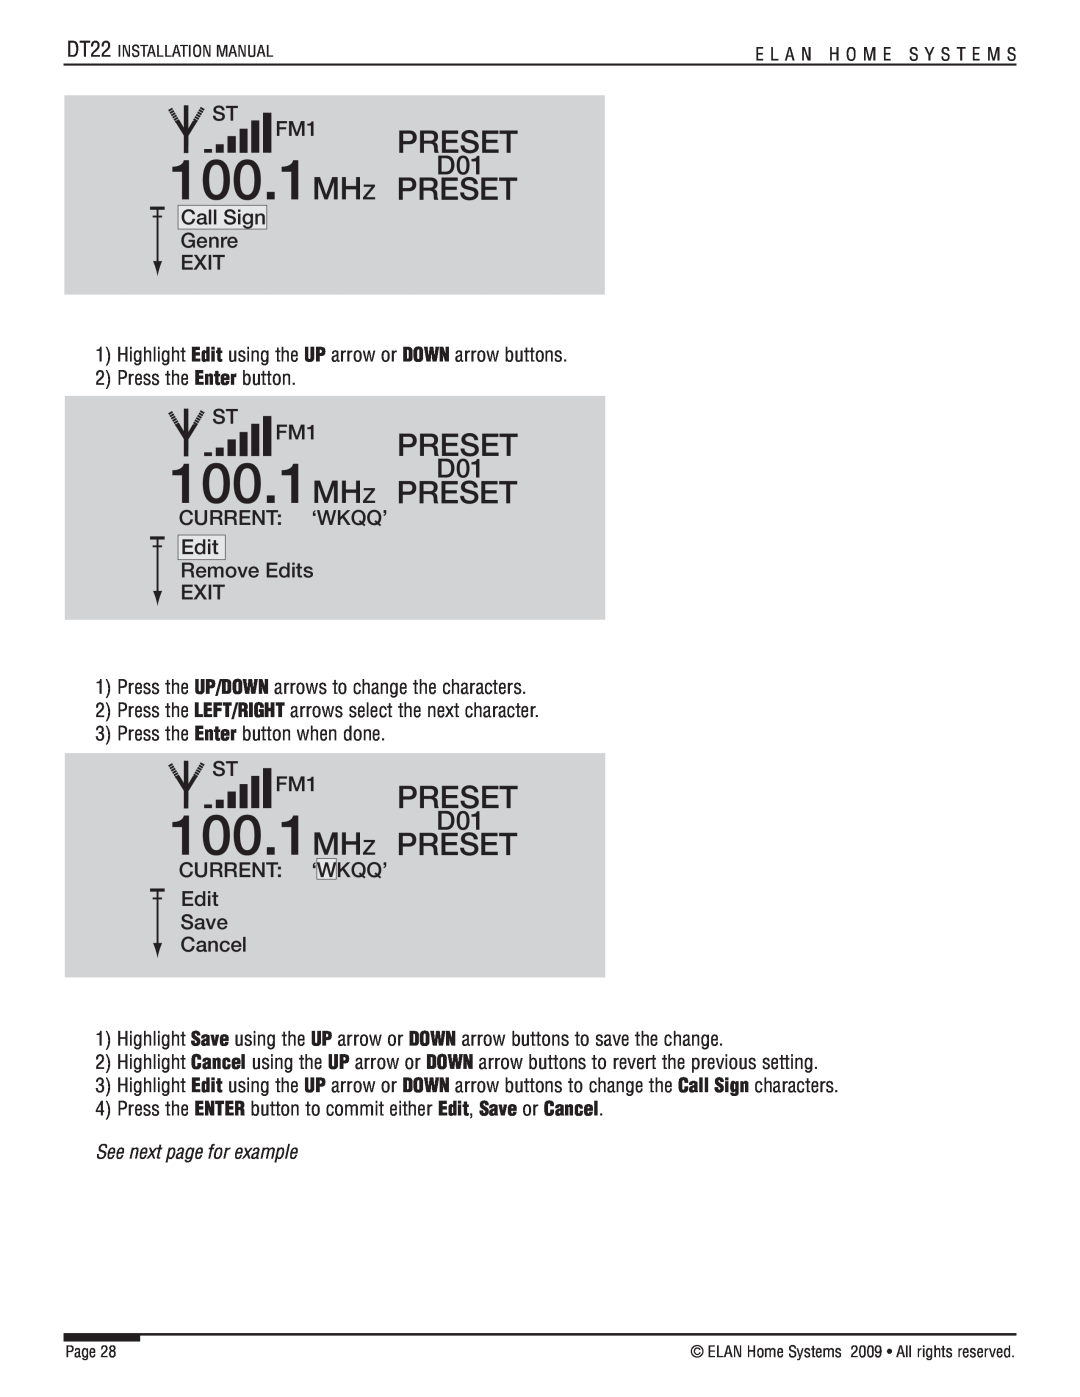 ELAN Home Systems DT22 manual 100.1MHZ PRESET, Preset 